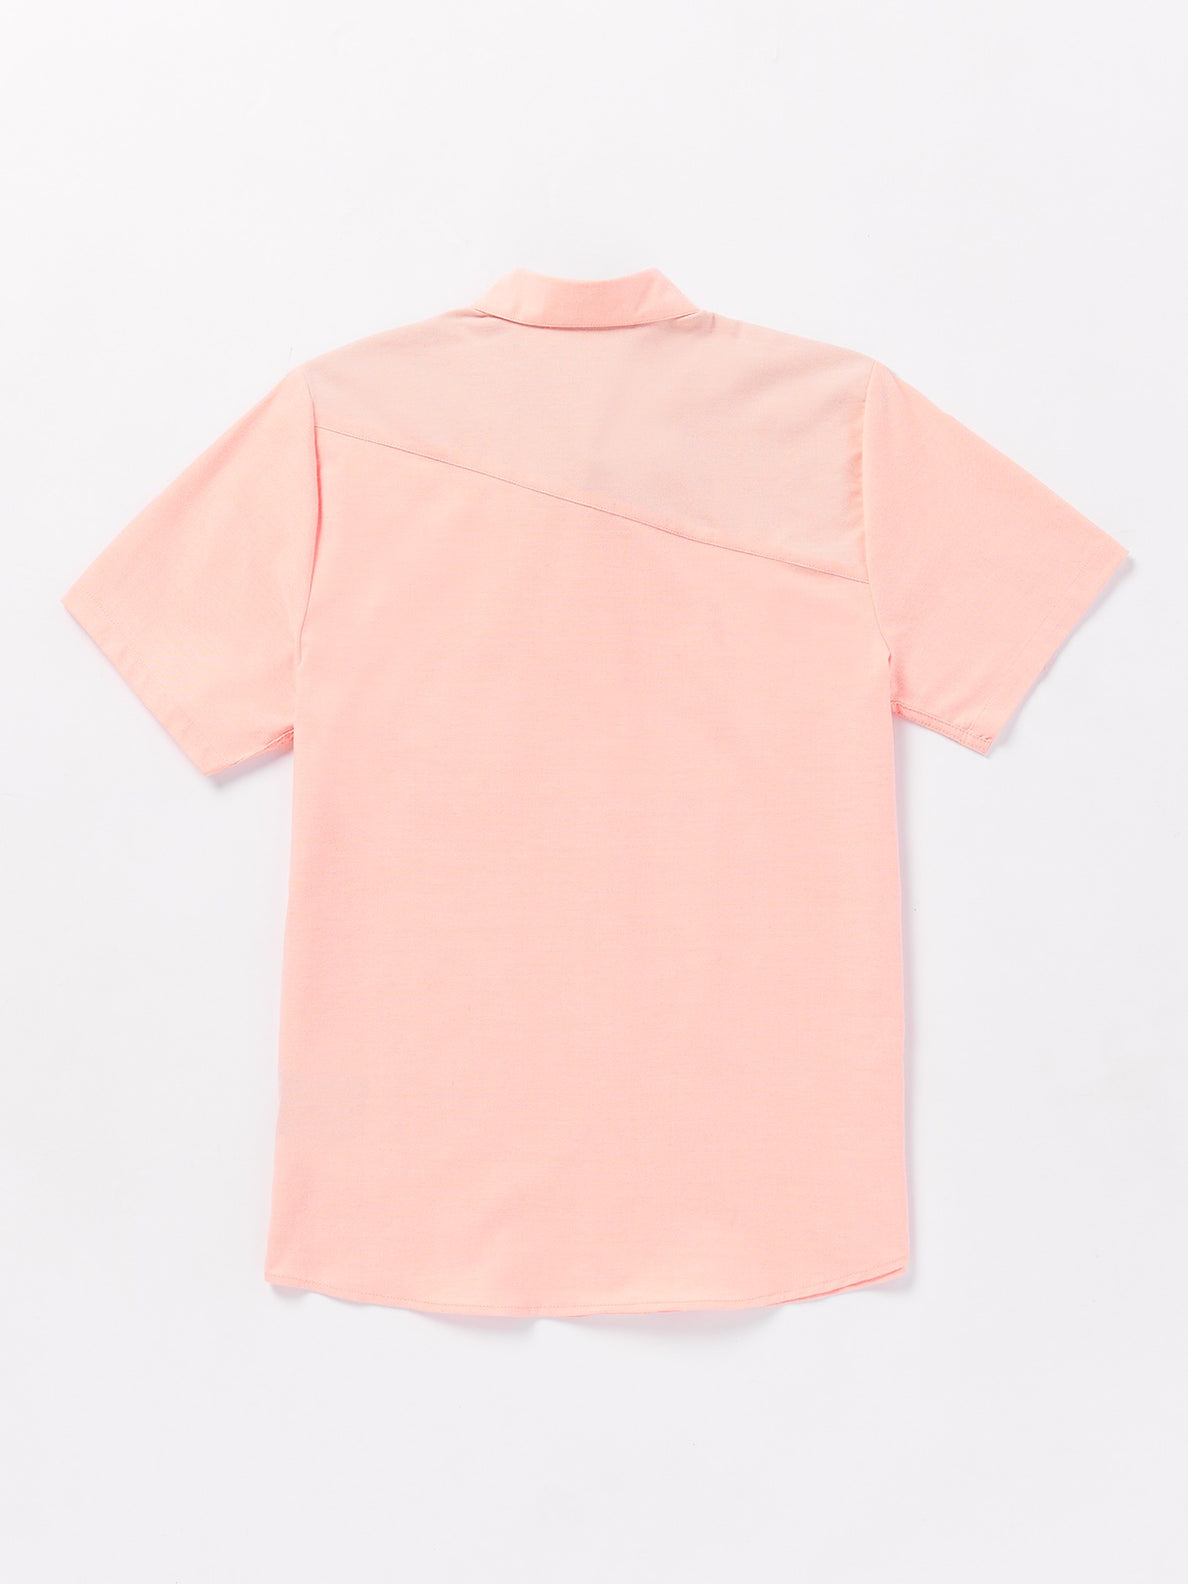 Everett Oxford Short Sleeve Shirt - Salmon